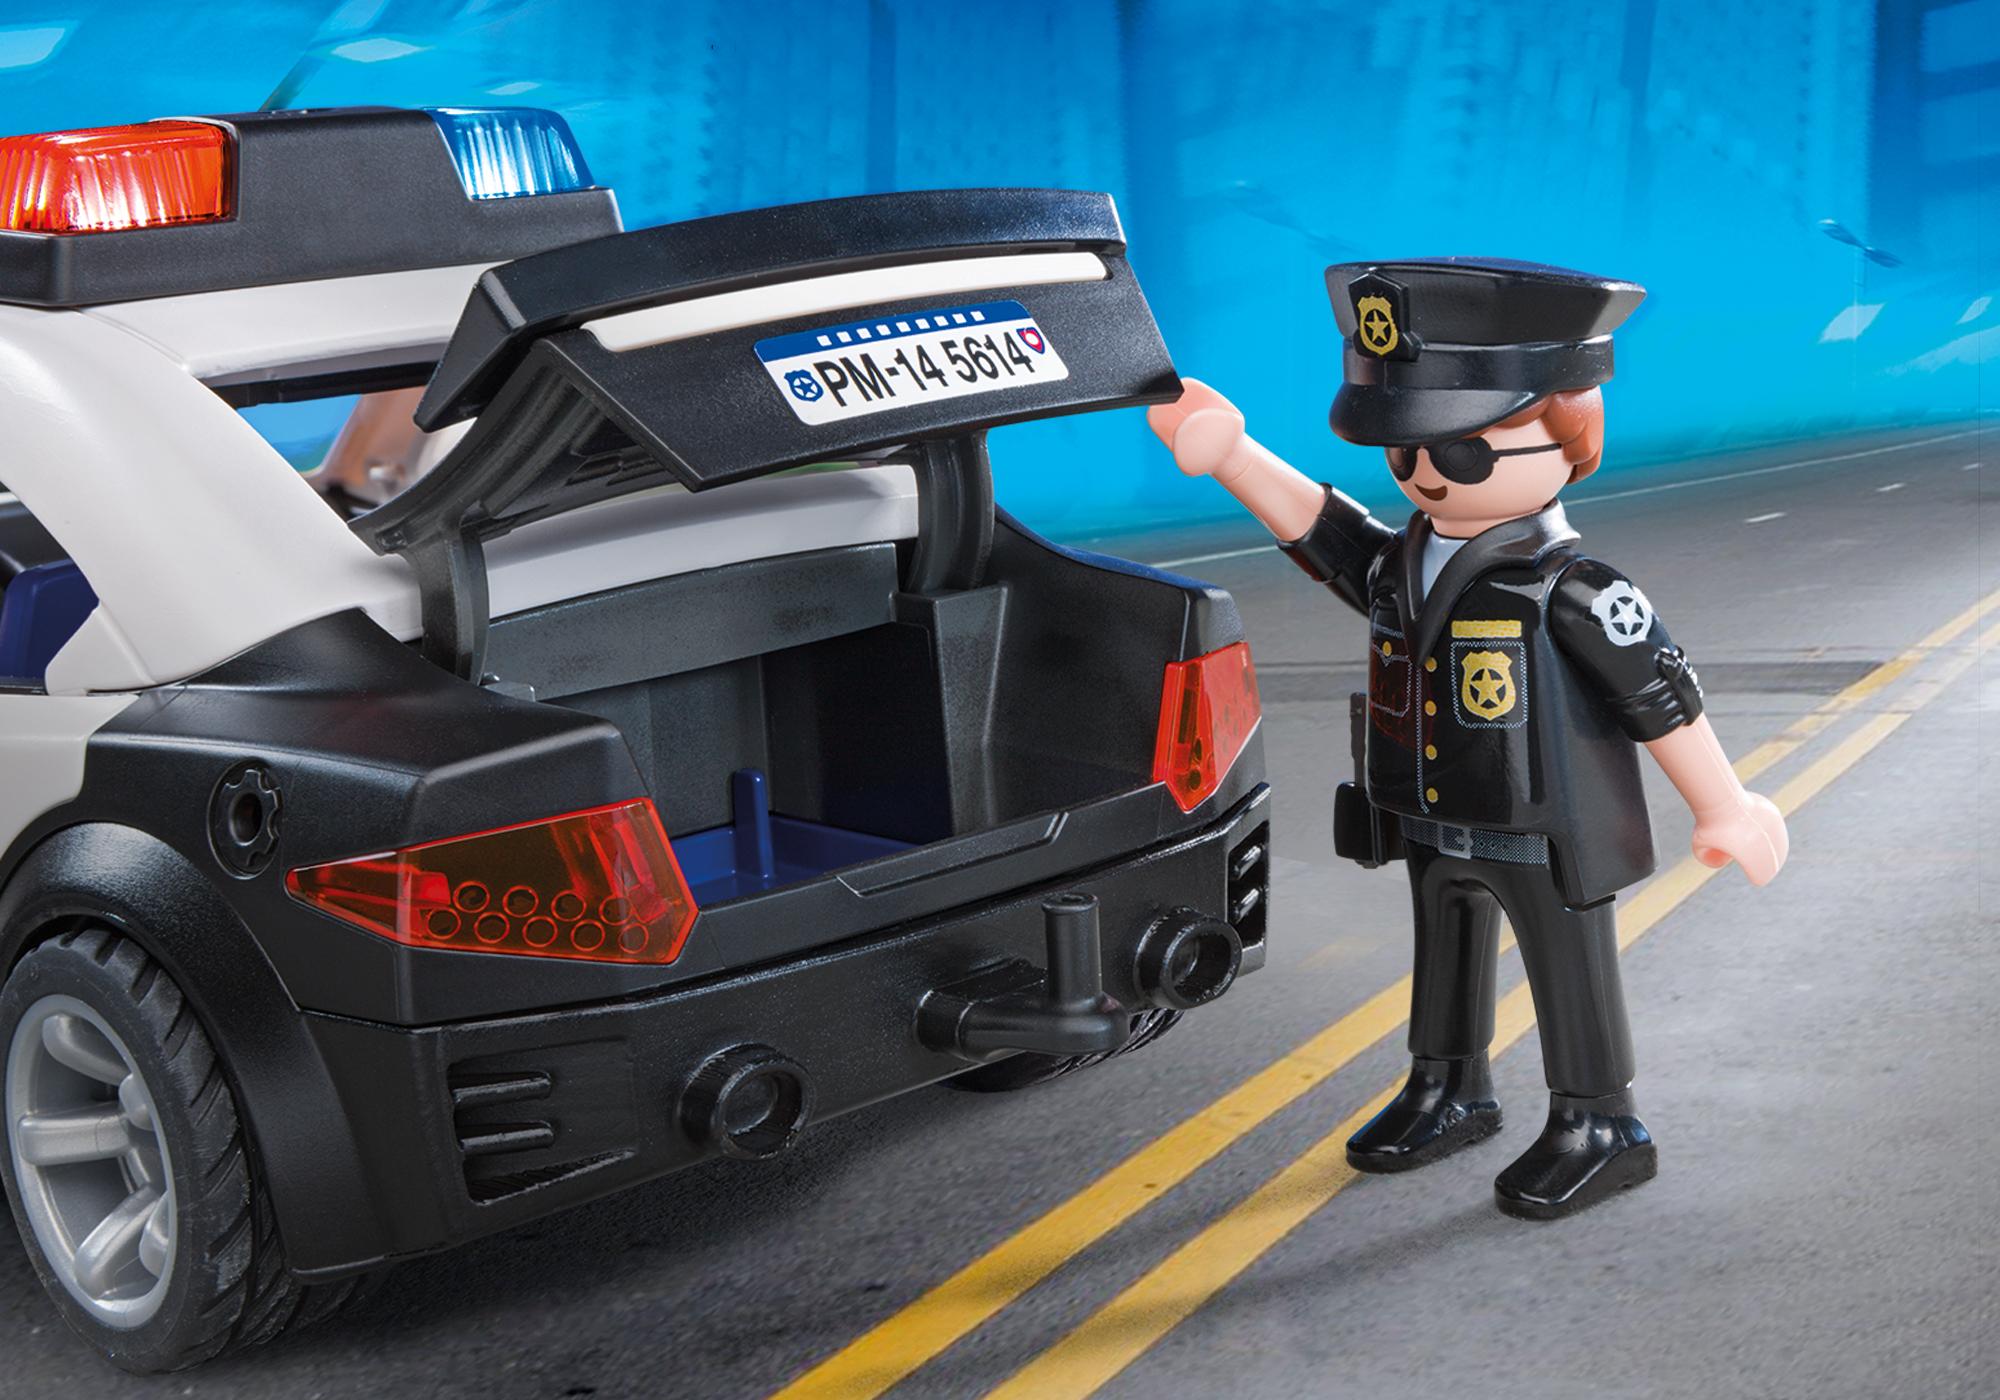 playmobil 5673 police cruiser